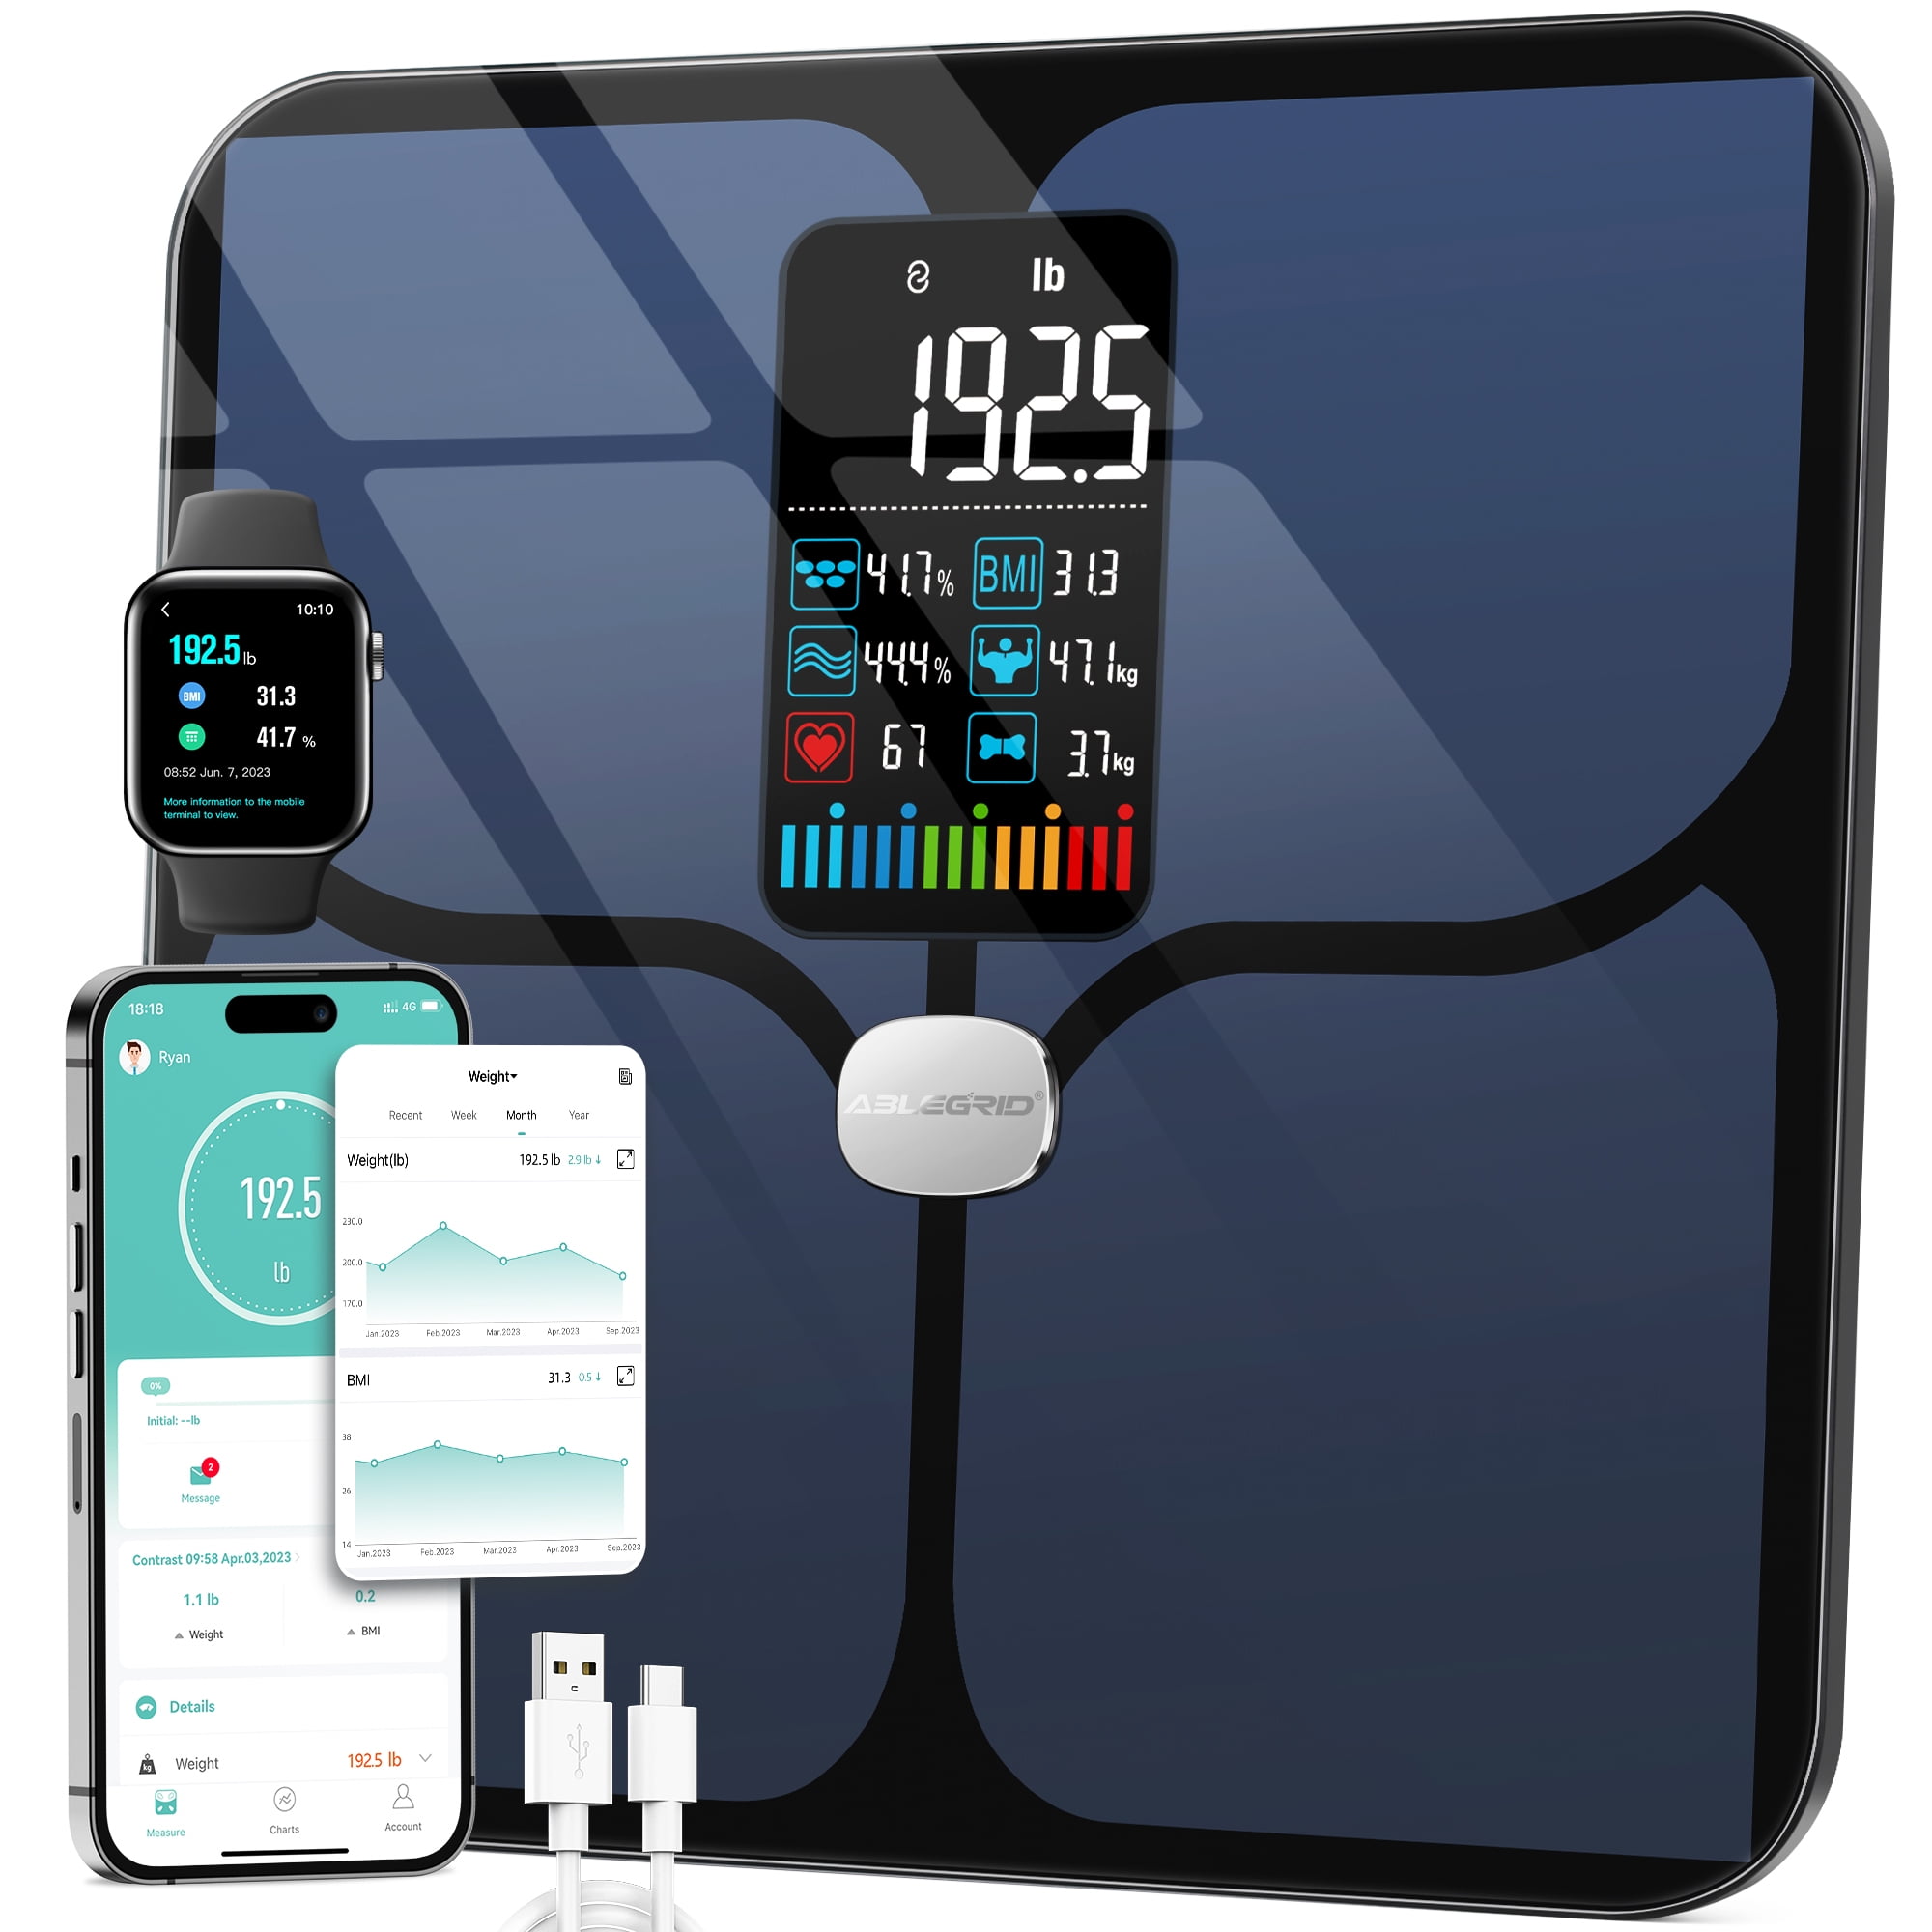 Renpho Elis Solar Smart Body Scale review: No batteries needed